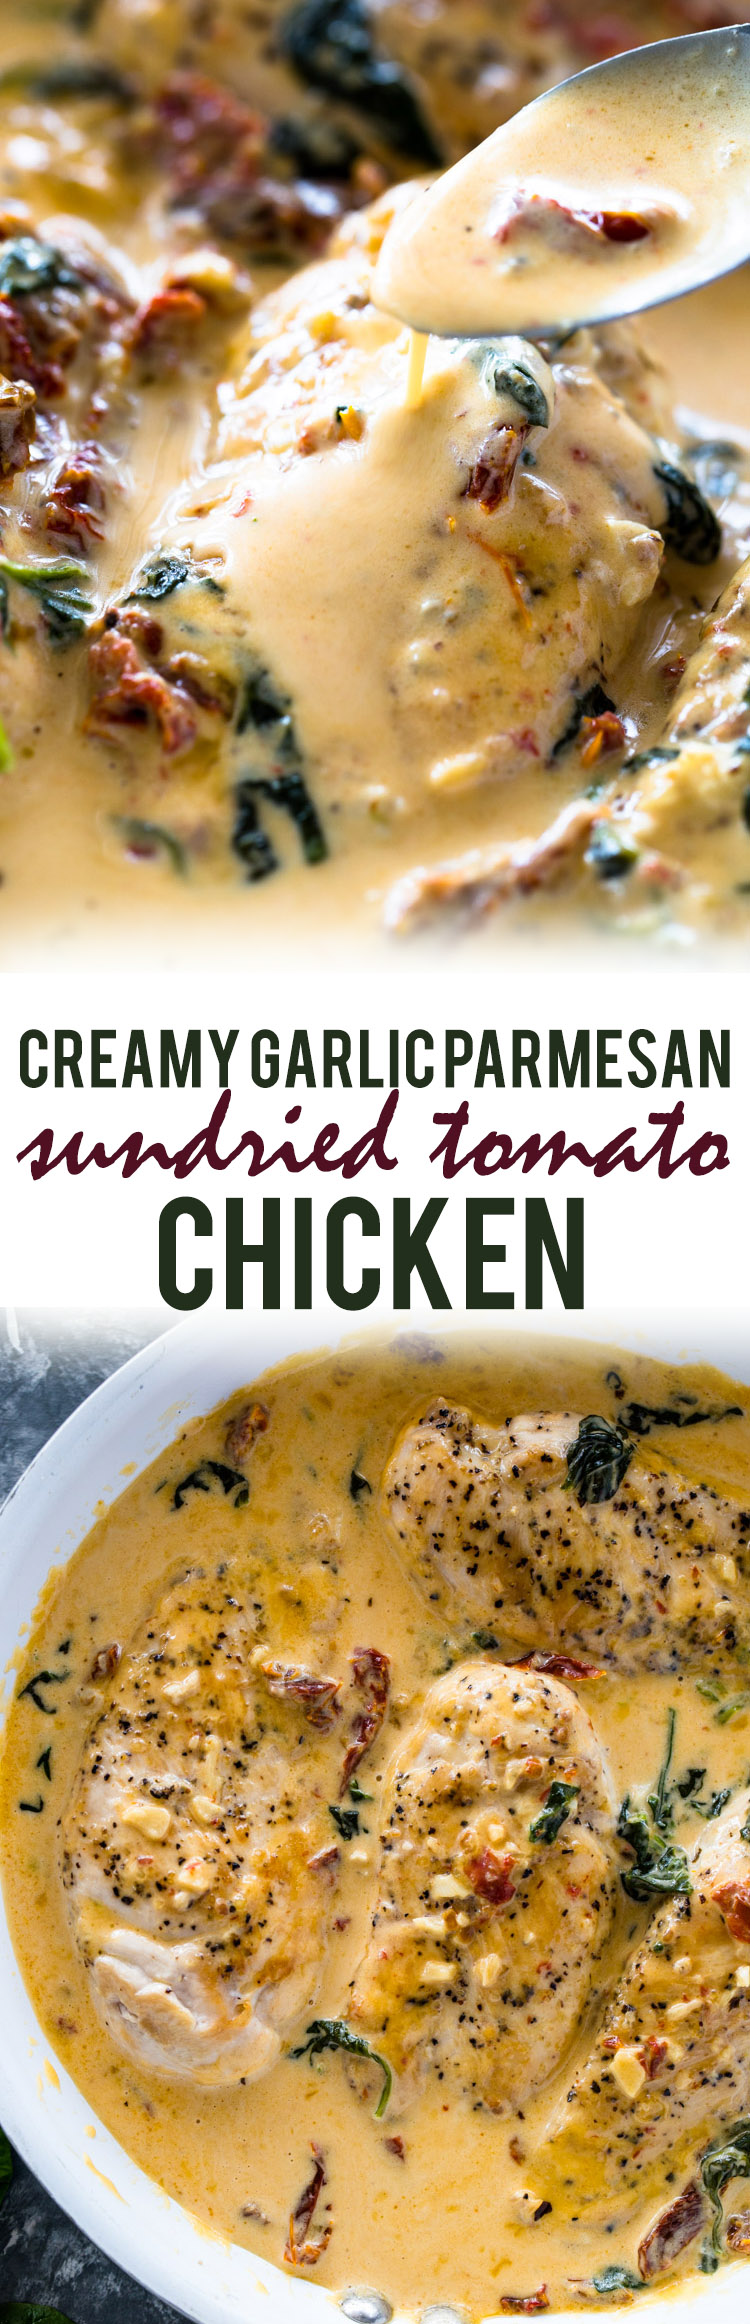 Creamy Garlic Parmesan Sun-dried Tomato Chicken